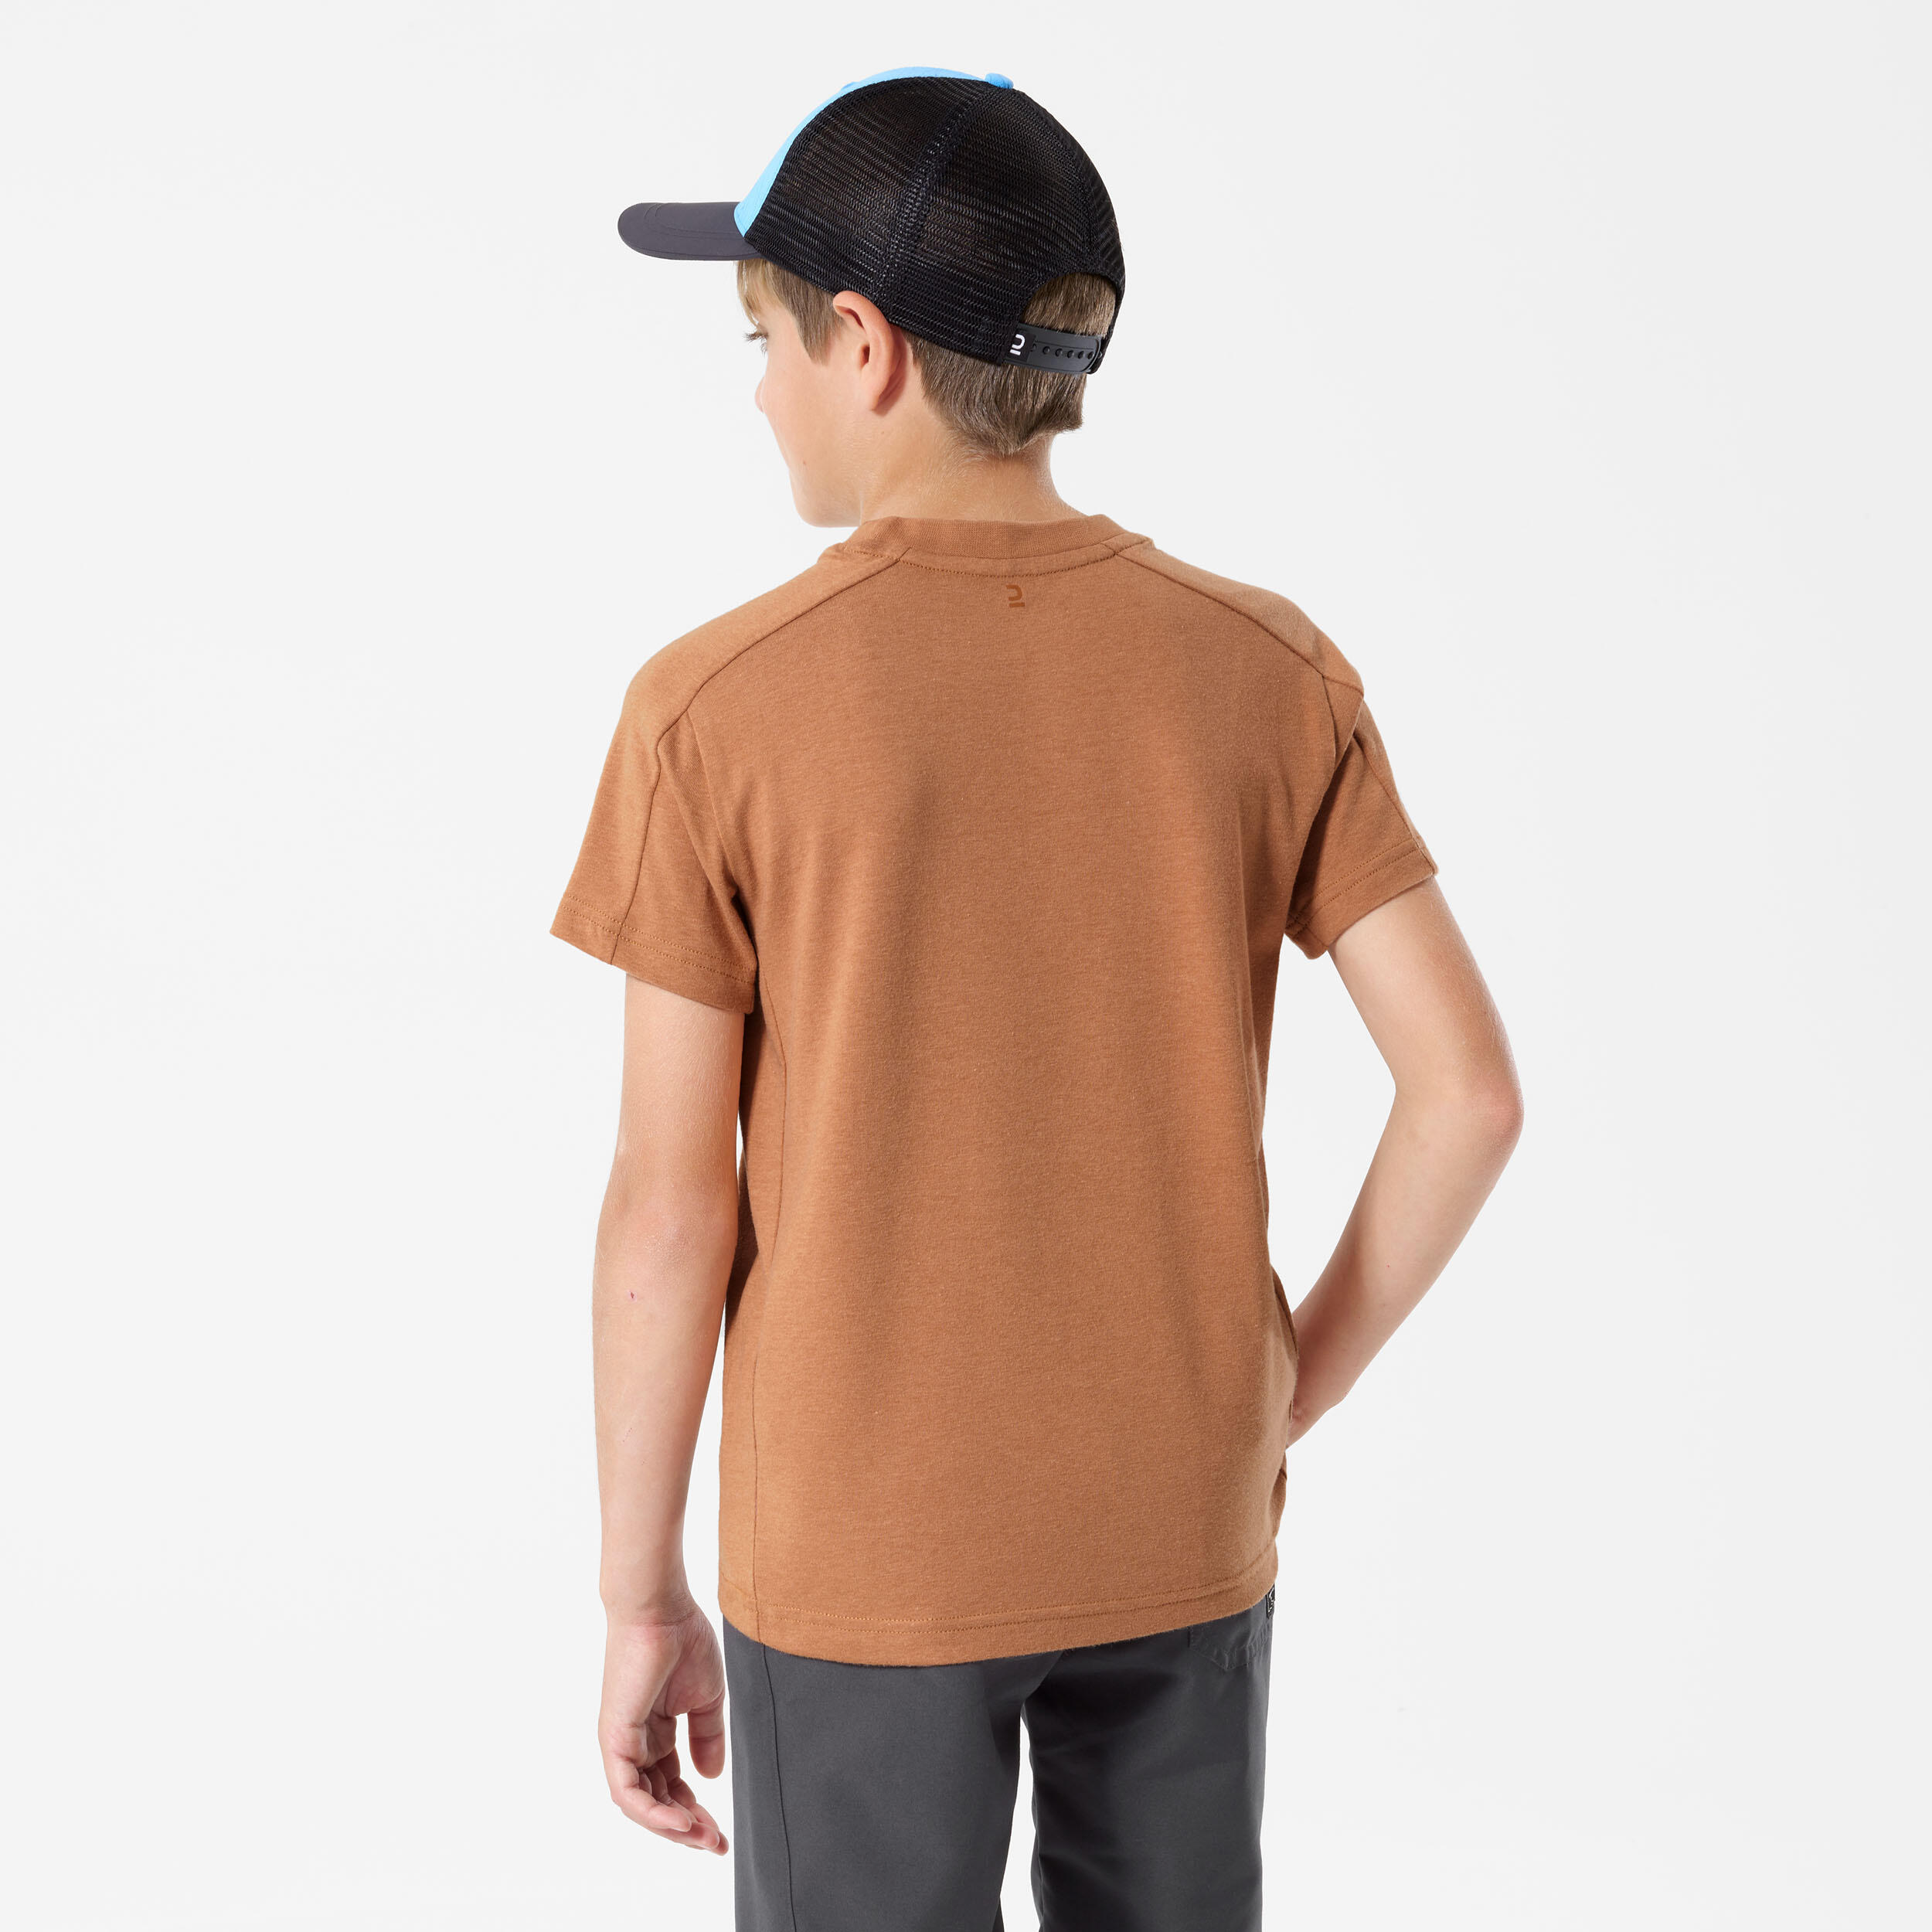 Child's hiking T-Shirt - MH100 brown - 7-15 years 4/6